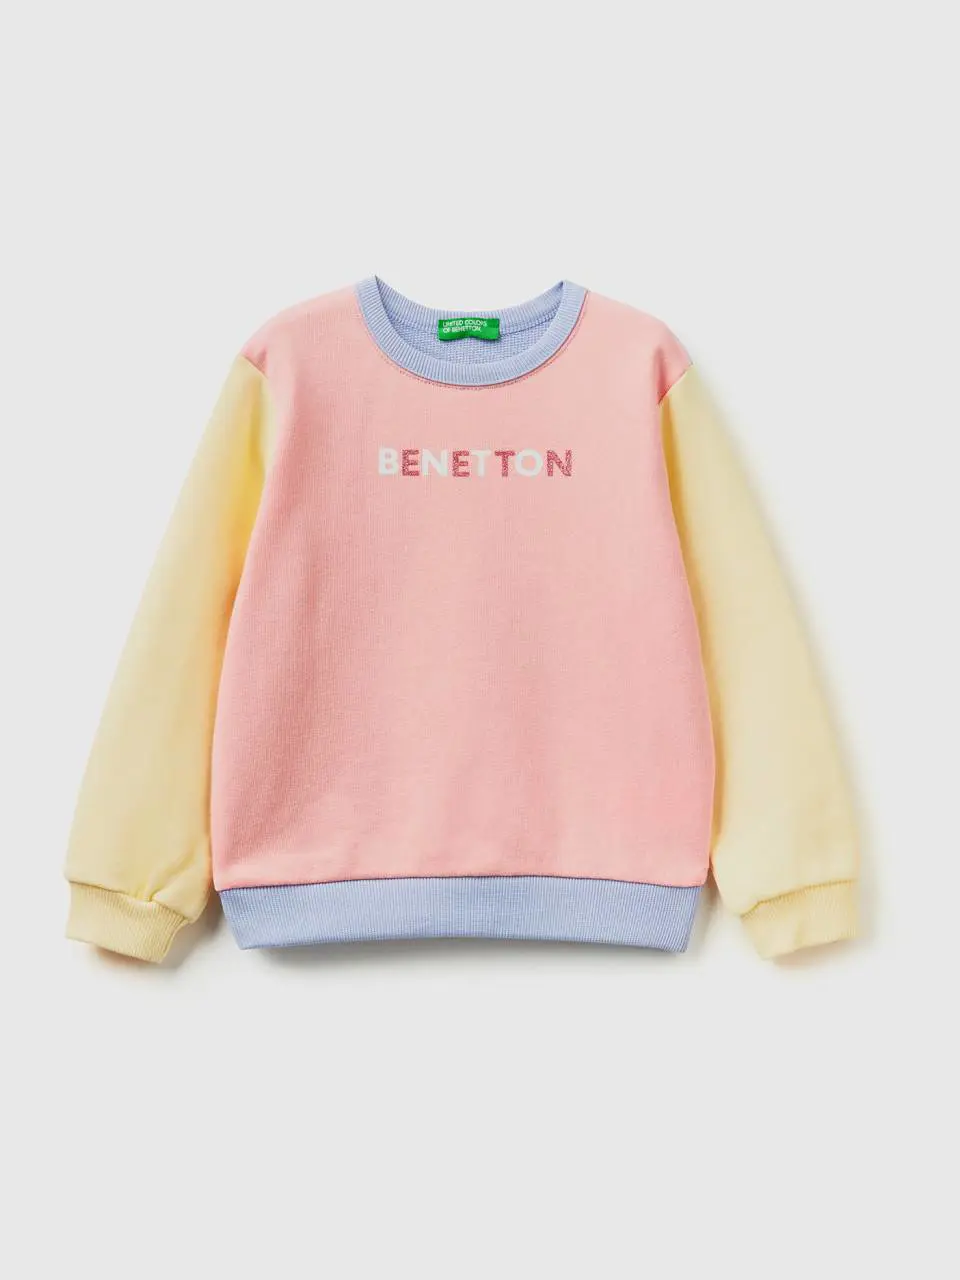 Benetton color block sweatshirt in organic cotton with glittery print. 1